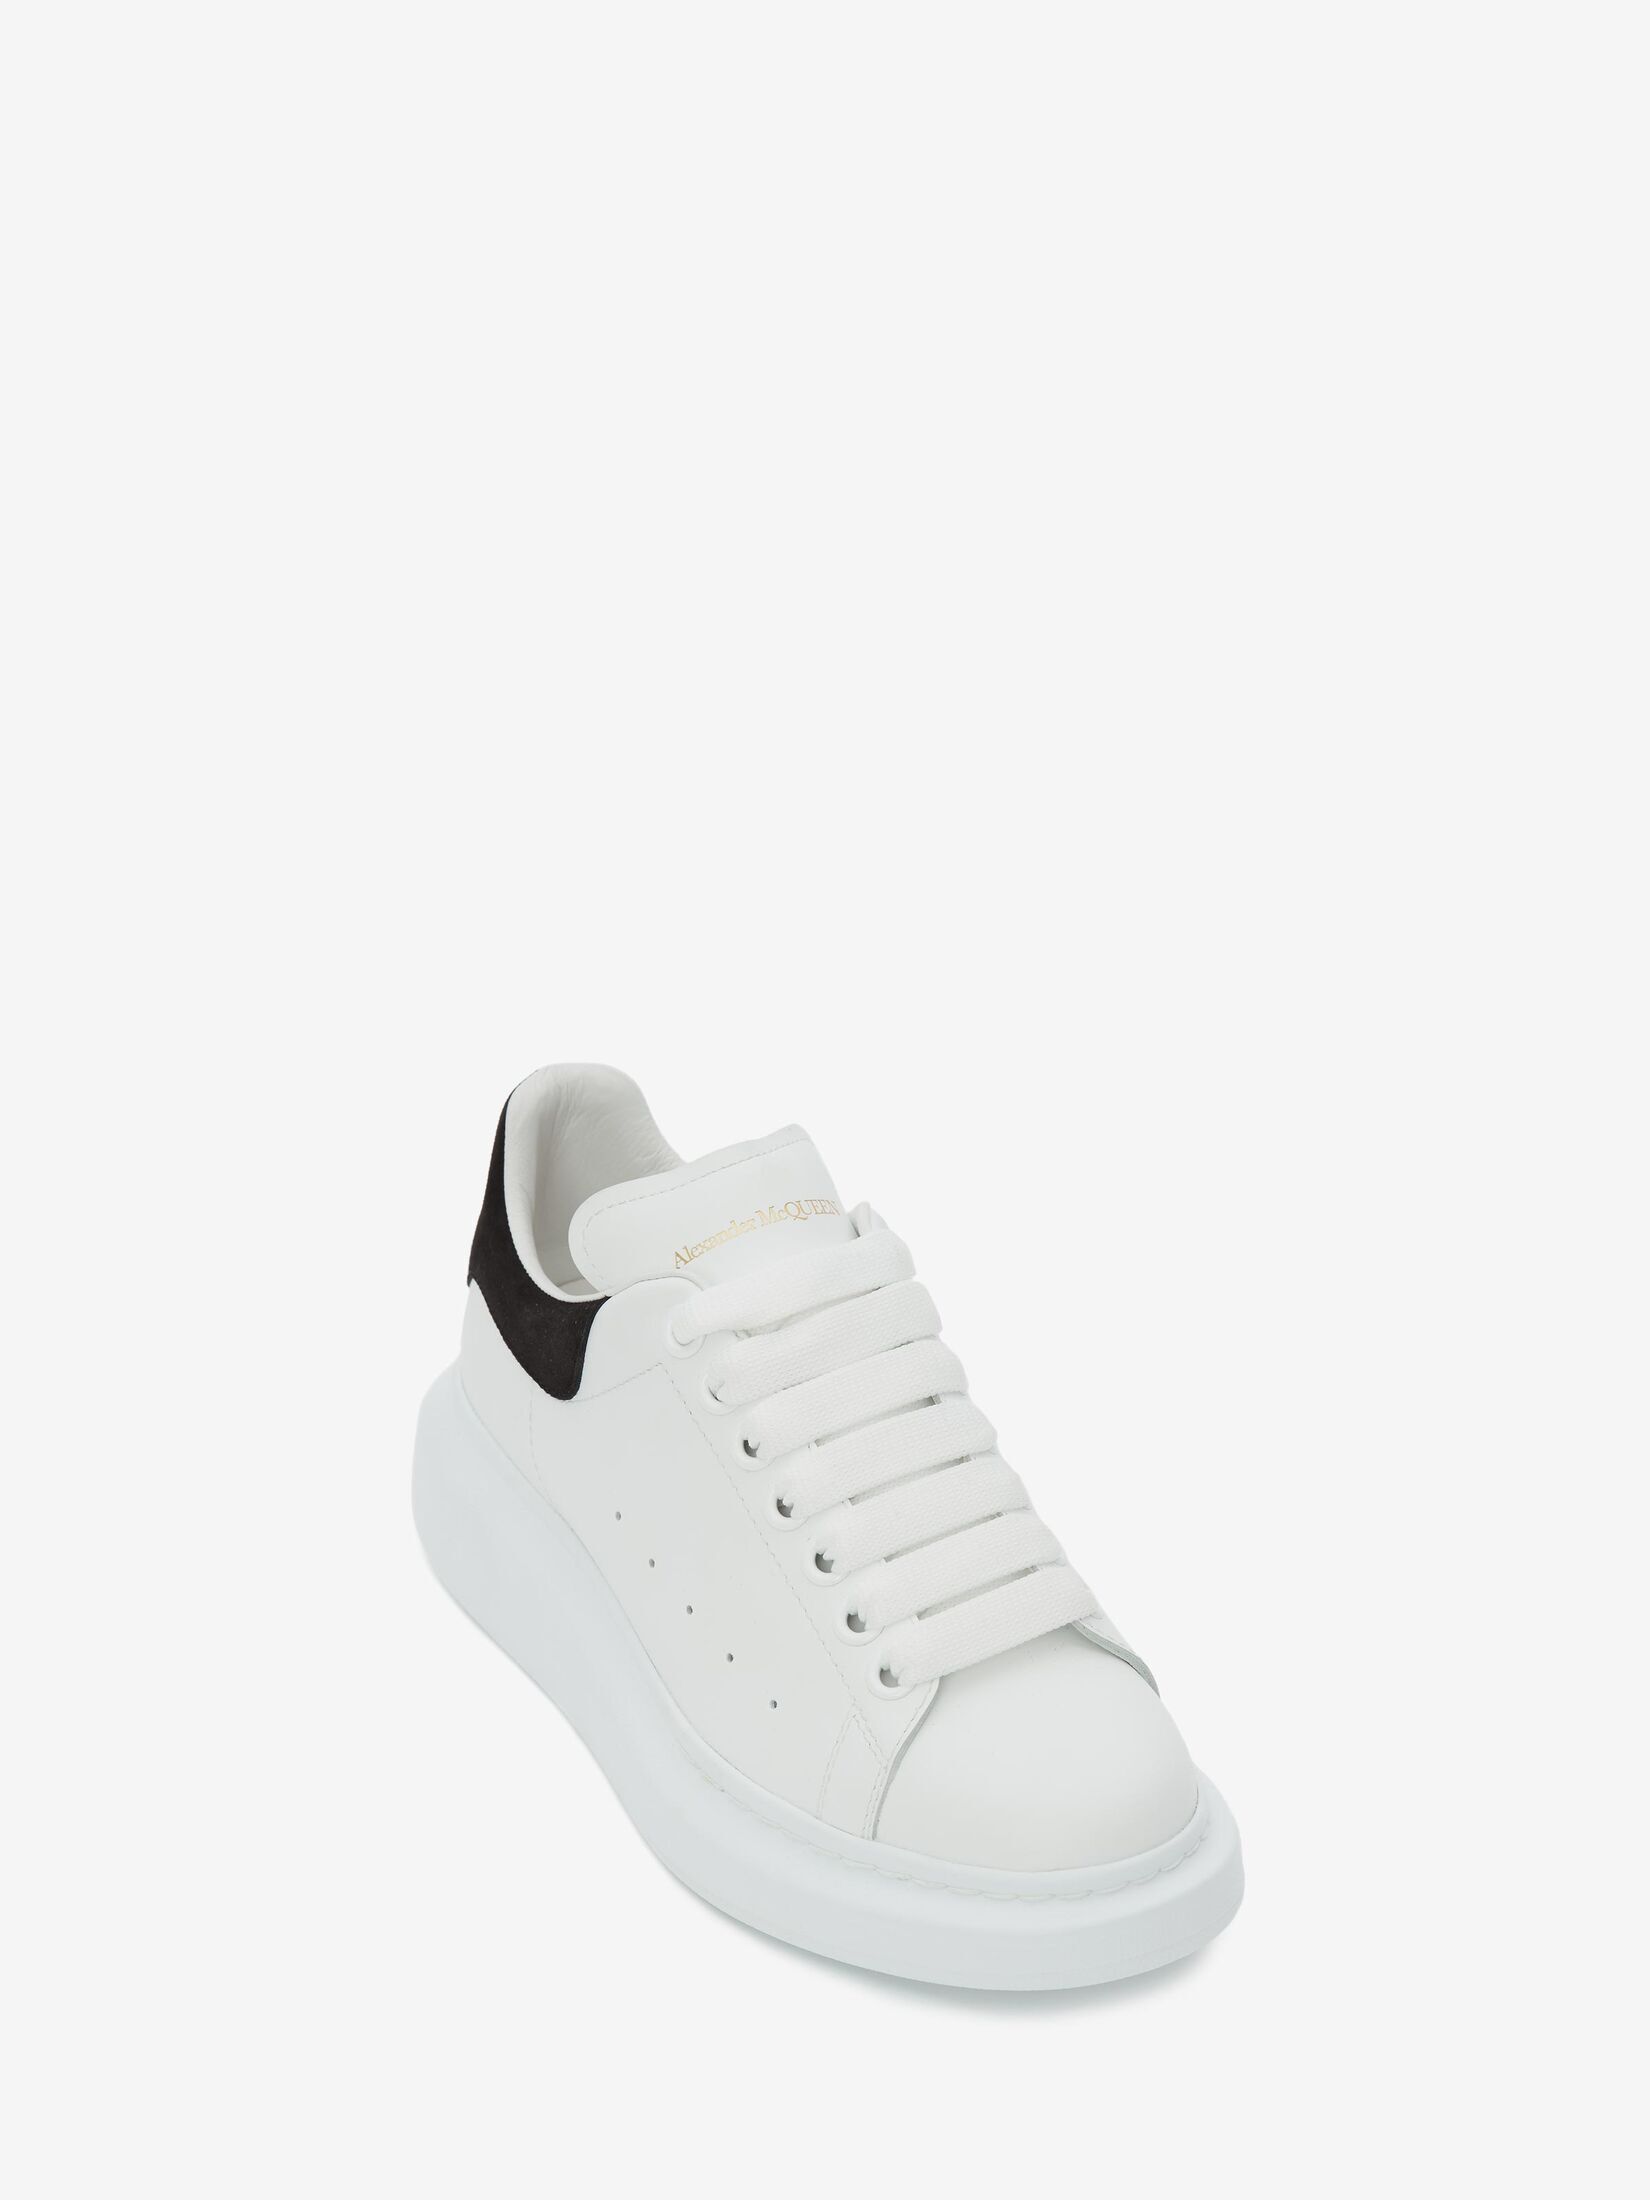 Women's Oversized Sneaker in White/black | Alexander McQueen